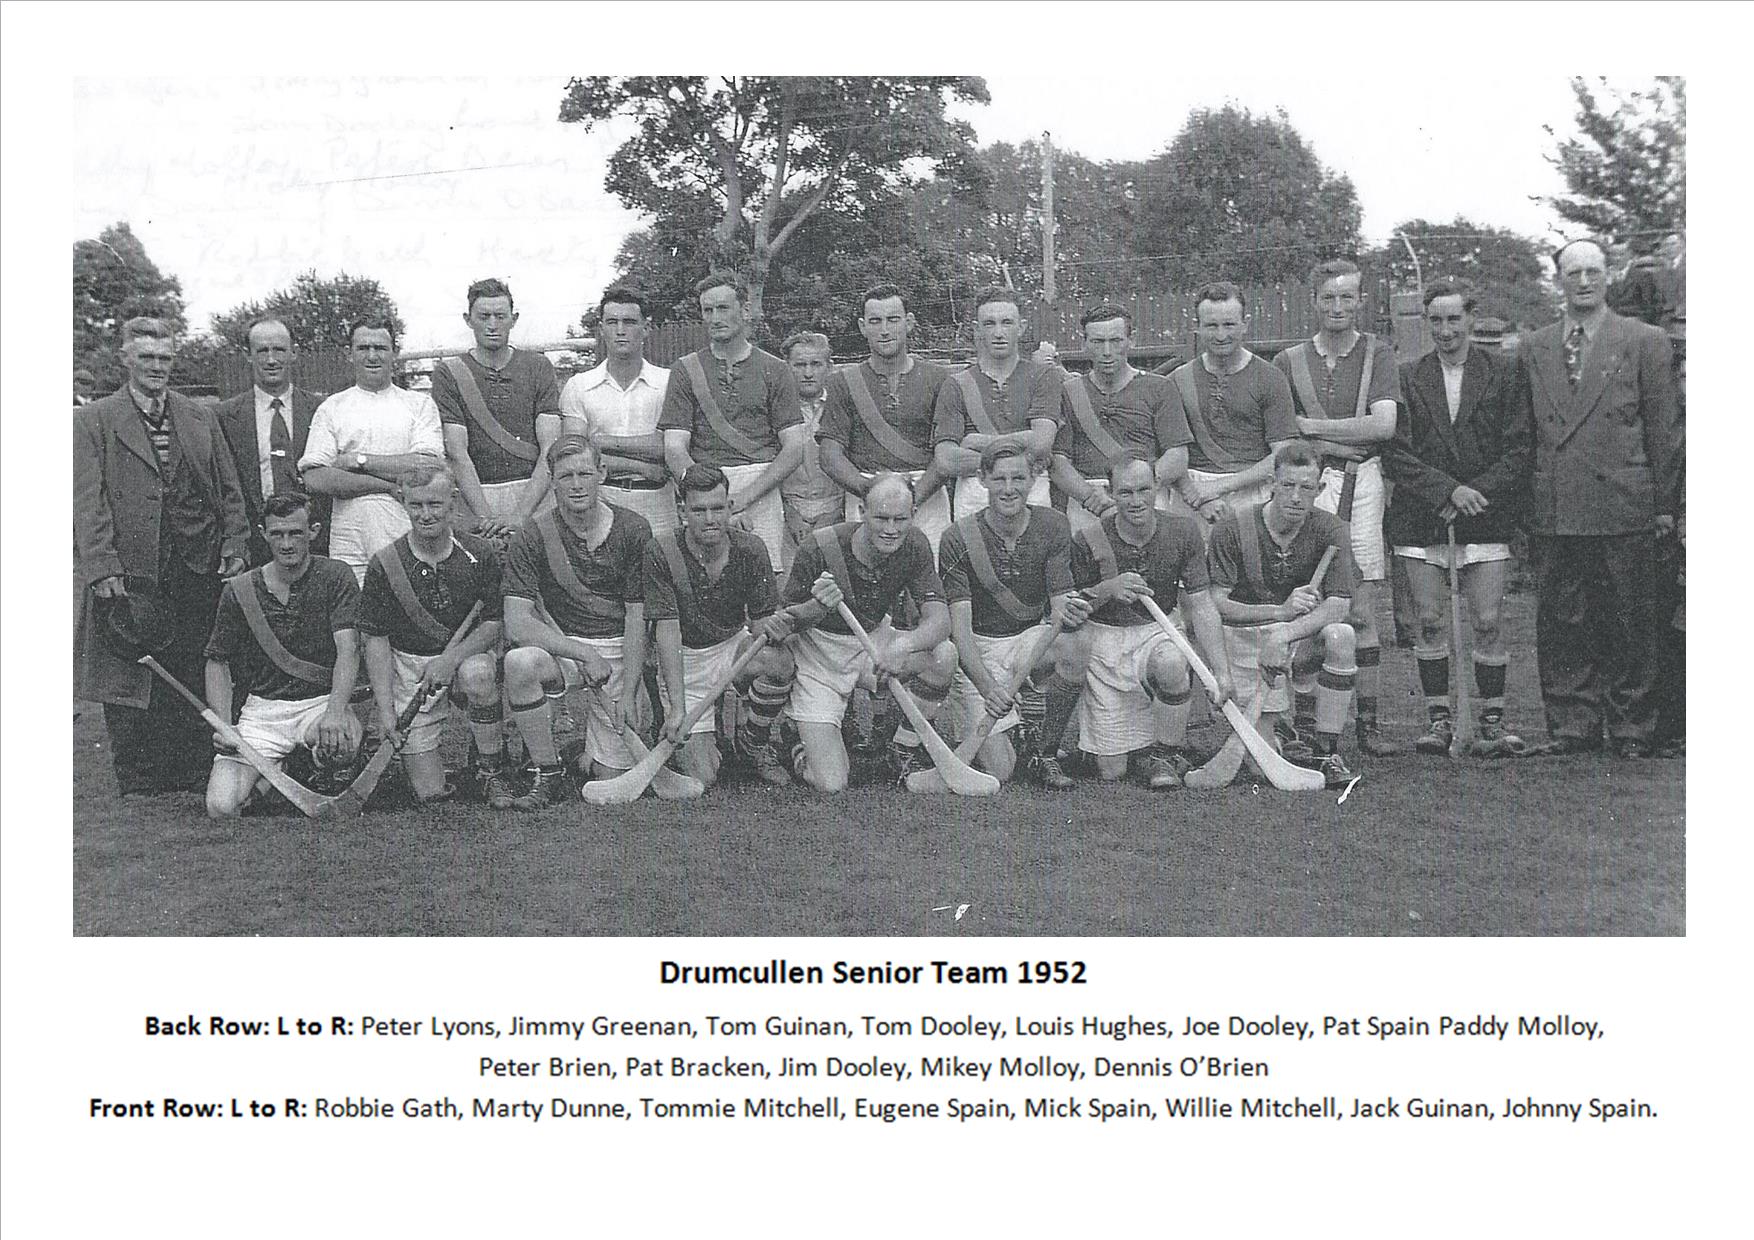 Drumcullen Senior Team - 1952